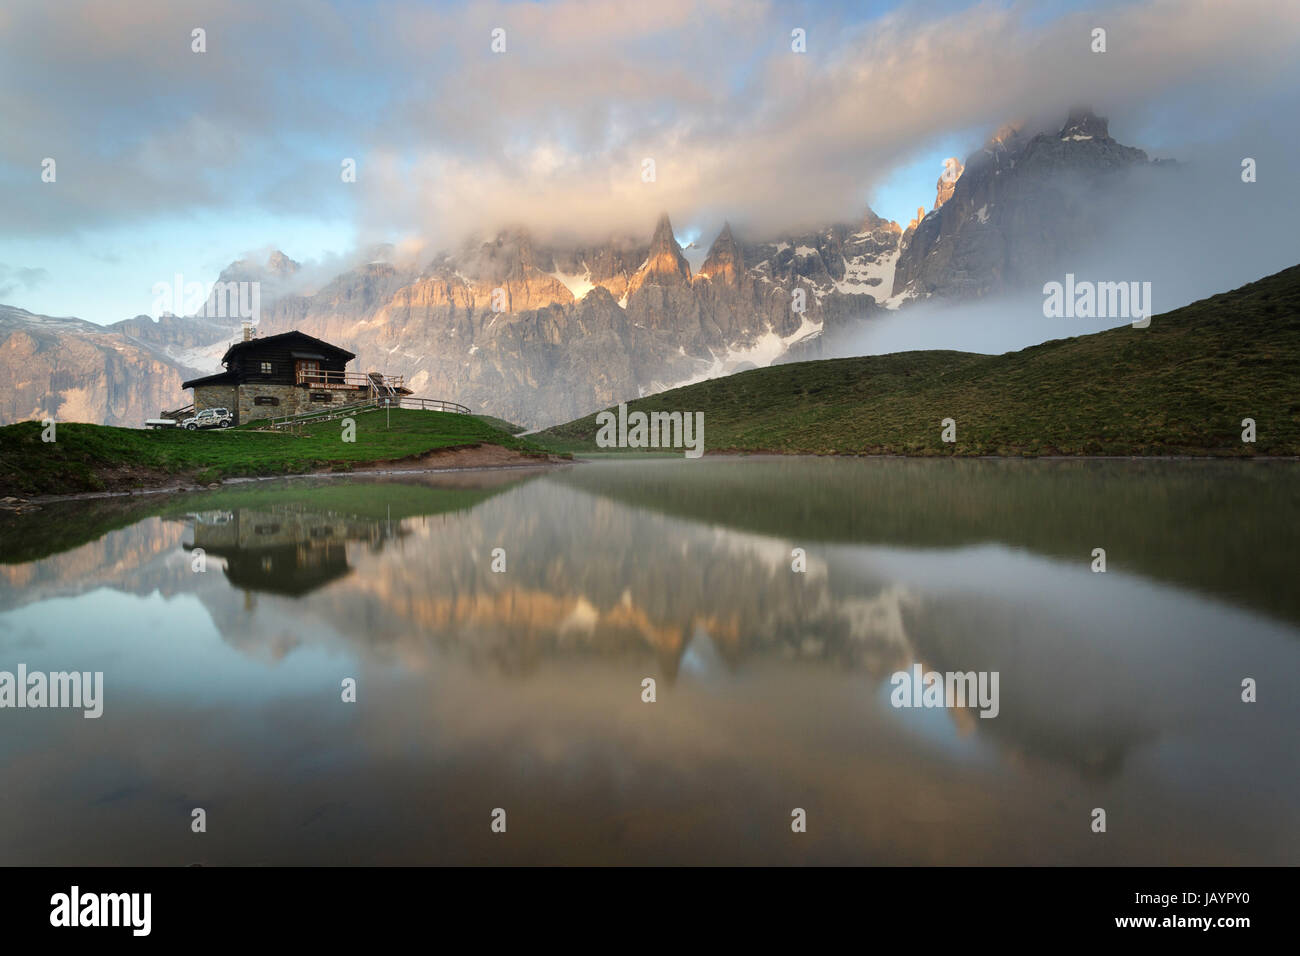 Twilight at Baita Segantini, Dolomites, Italy. Stock Photo